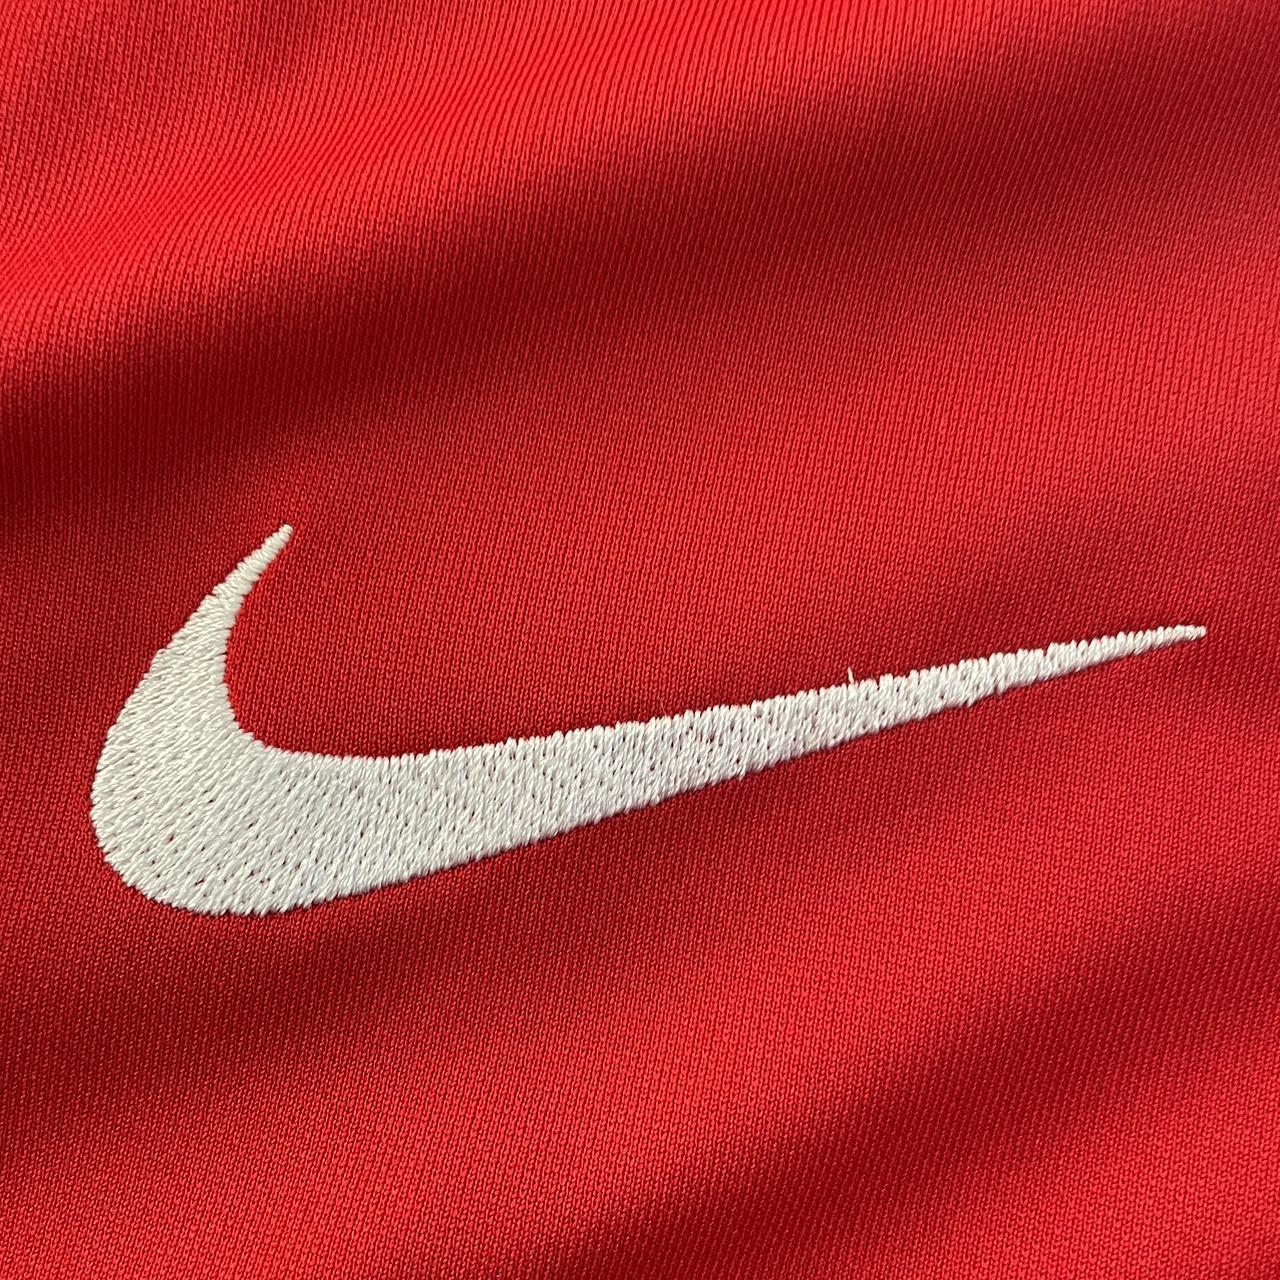 Nike Men's T-shirt | Depop